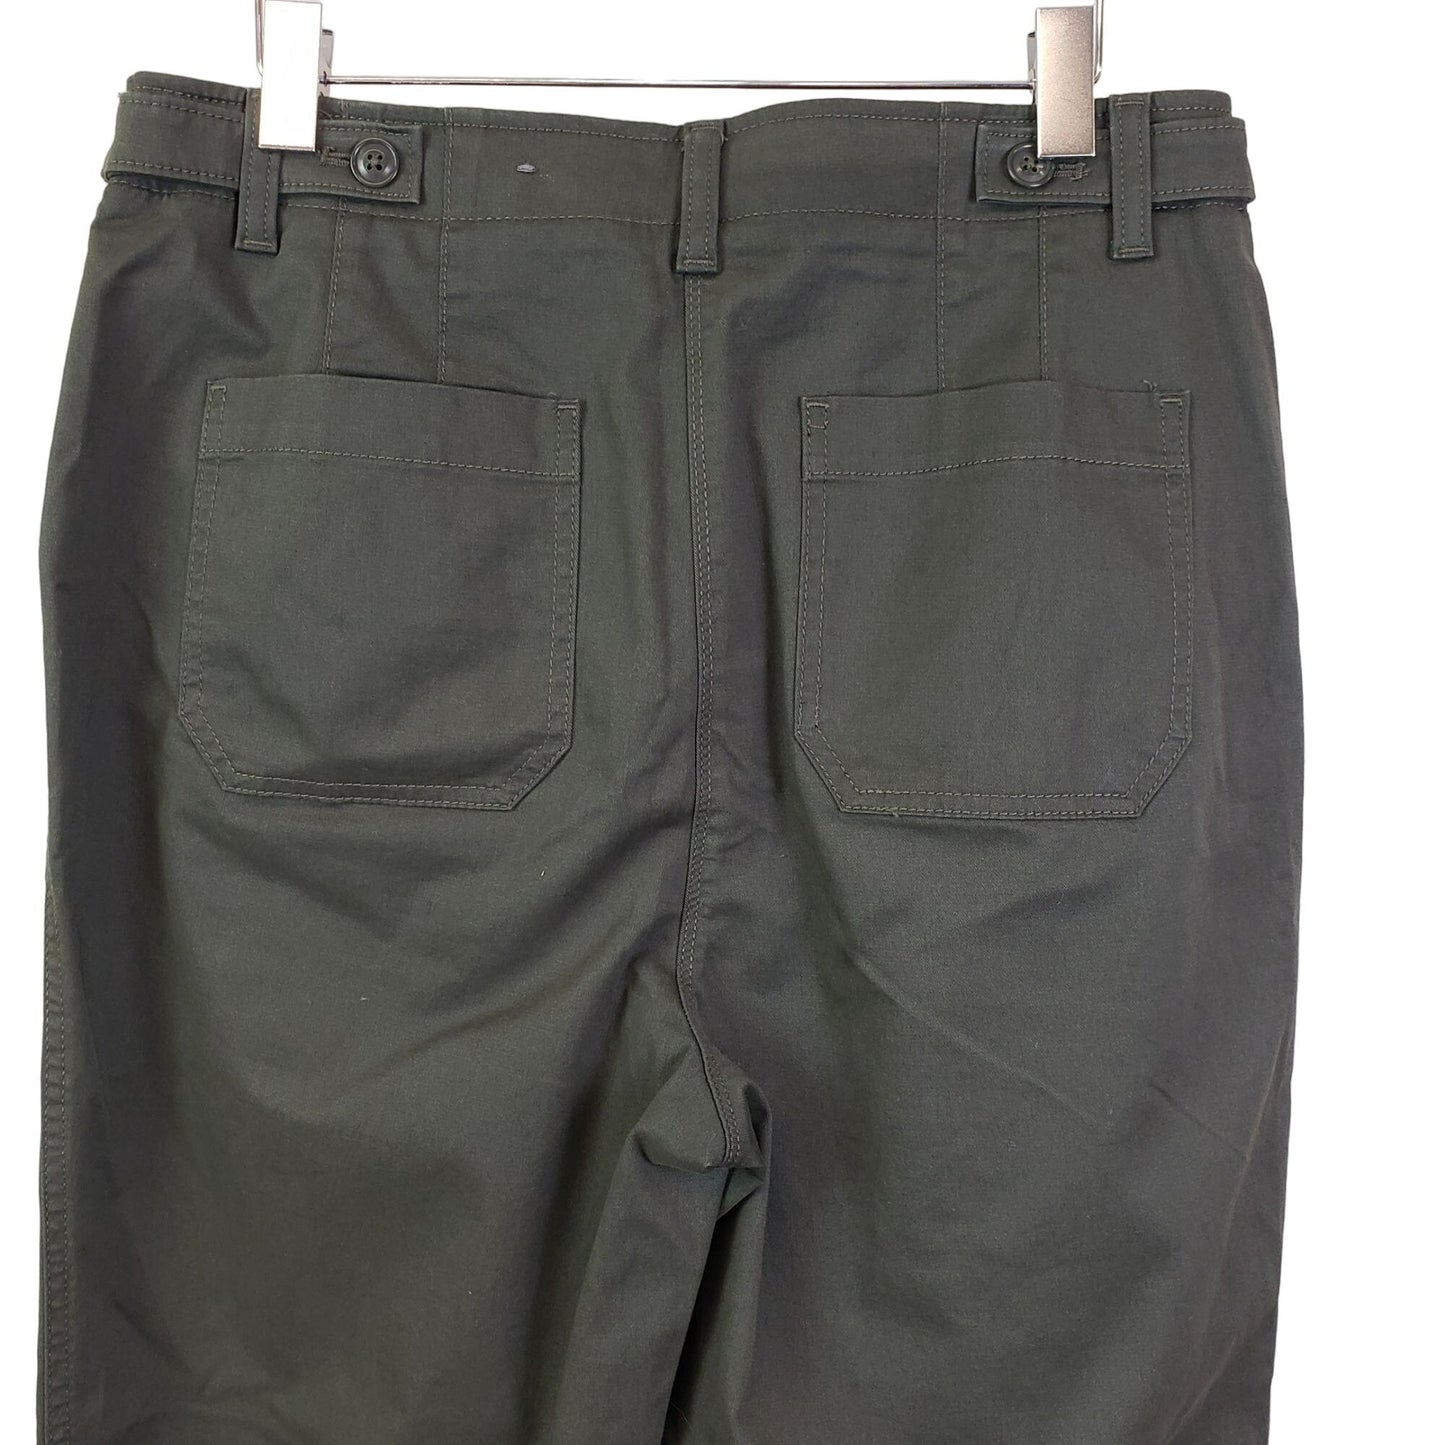 Talbots High Waist Patch Pocket Crop Pants Size 12